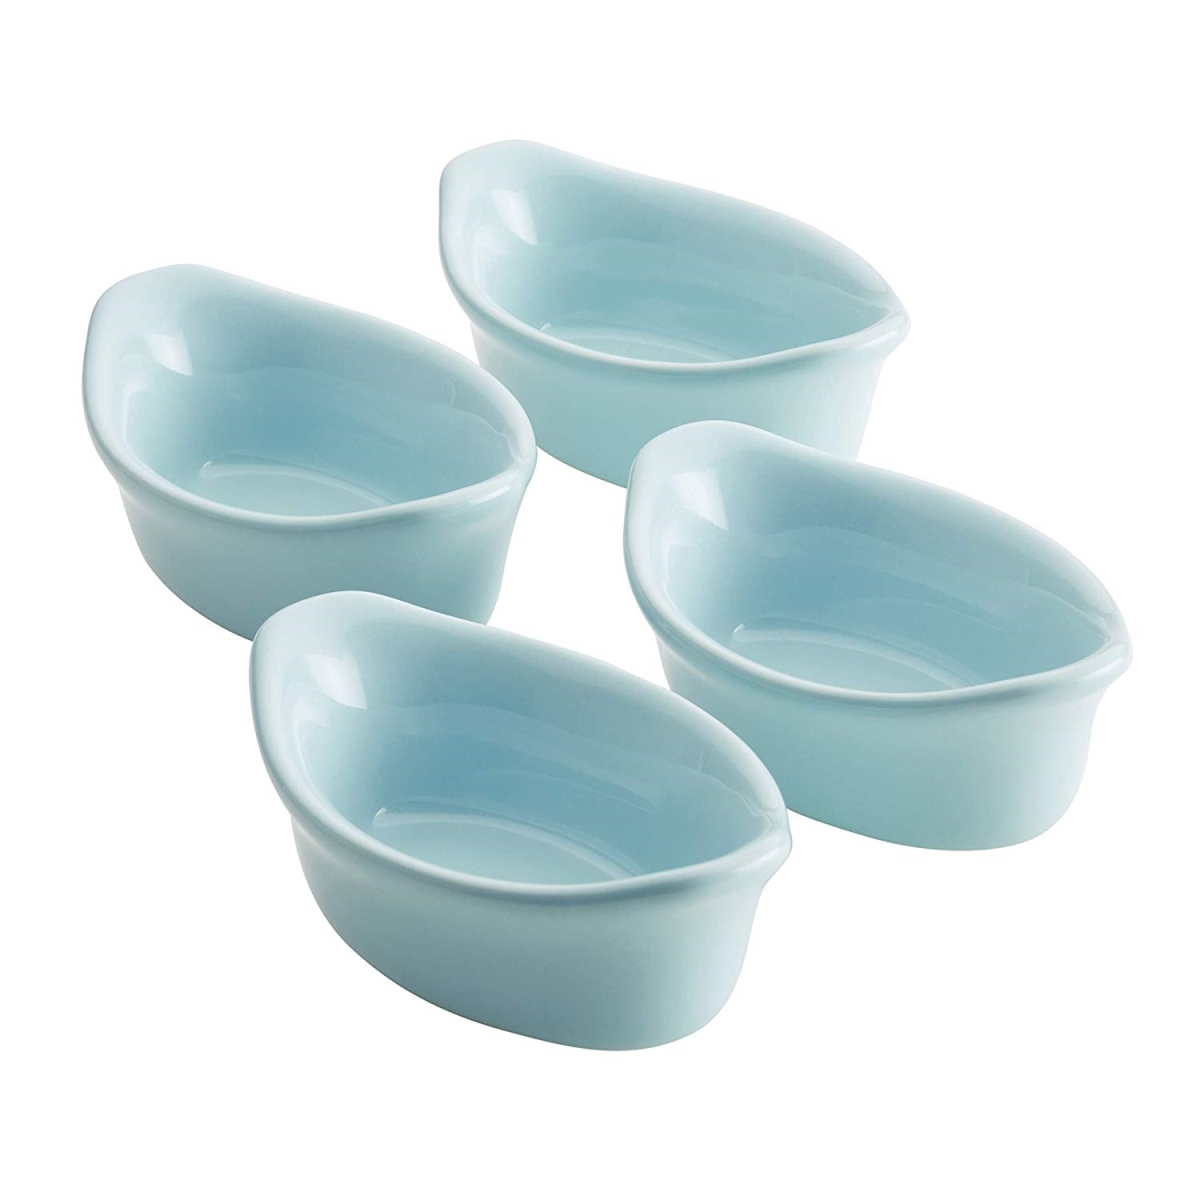 47863 Ceramics Oval Dipping Cups, Light Blue - 4 Piece